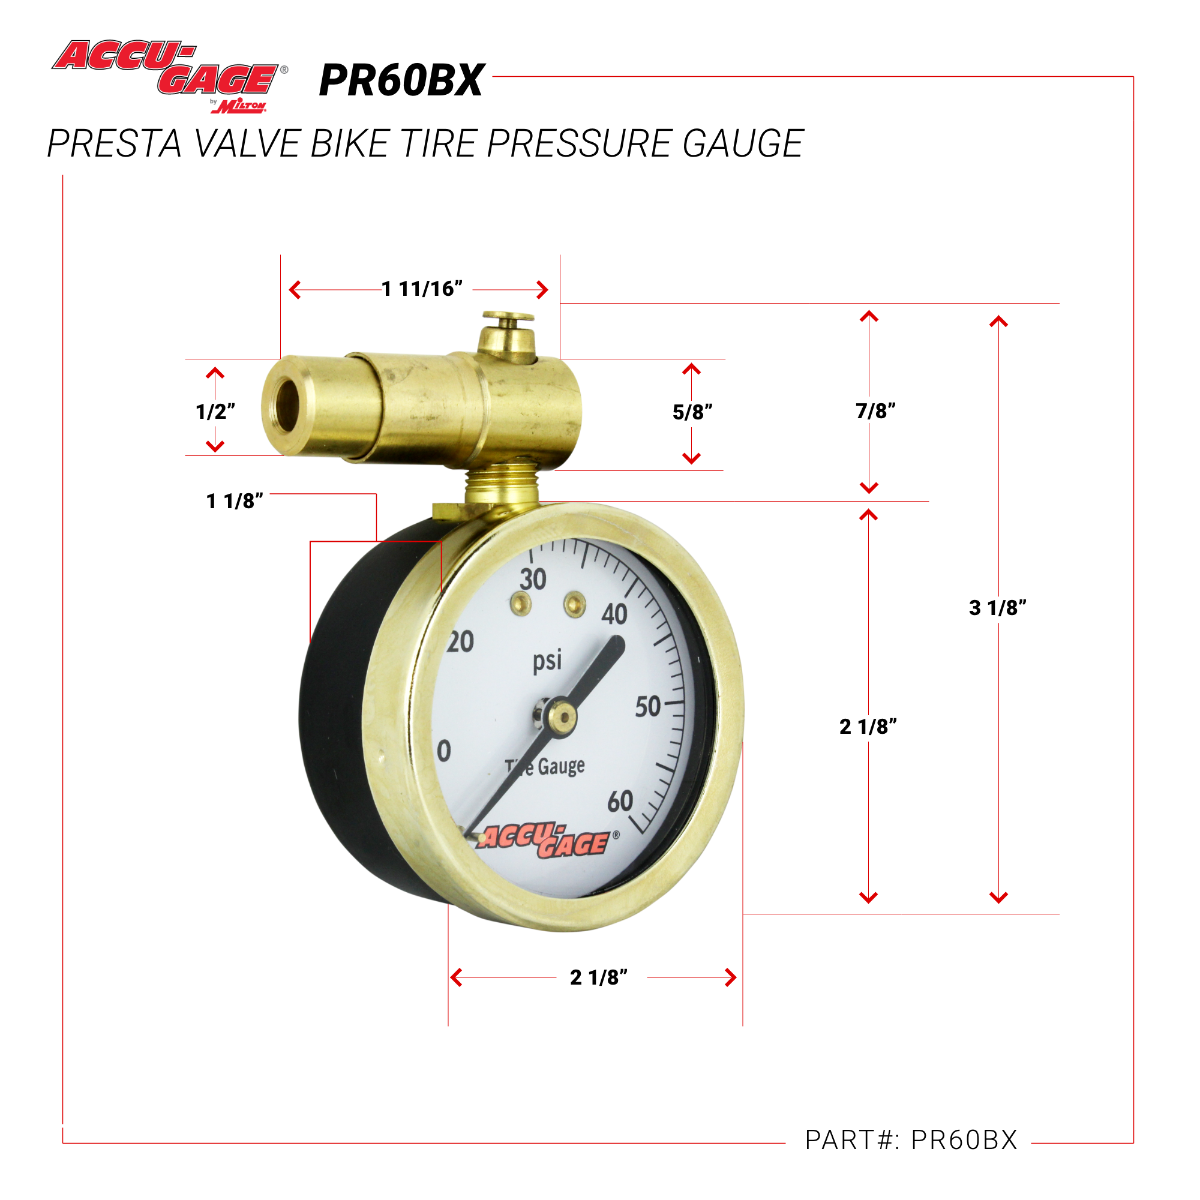 ACCU-GAGE® by Milton® Presta Valve Bike Tire Pressure Gauge with Bleeder Valve, for 0-60 PSI - ANSI Certified